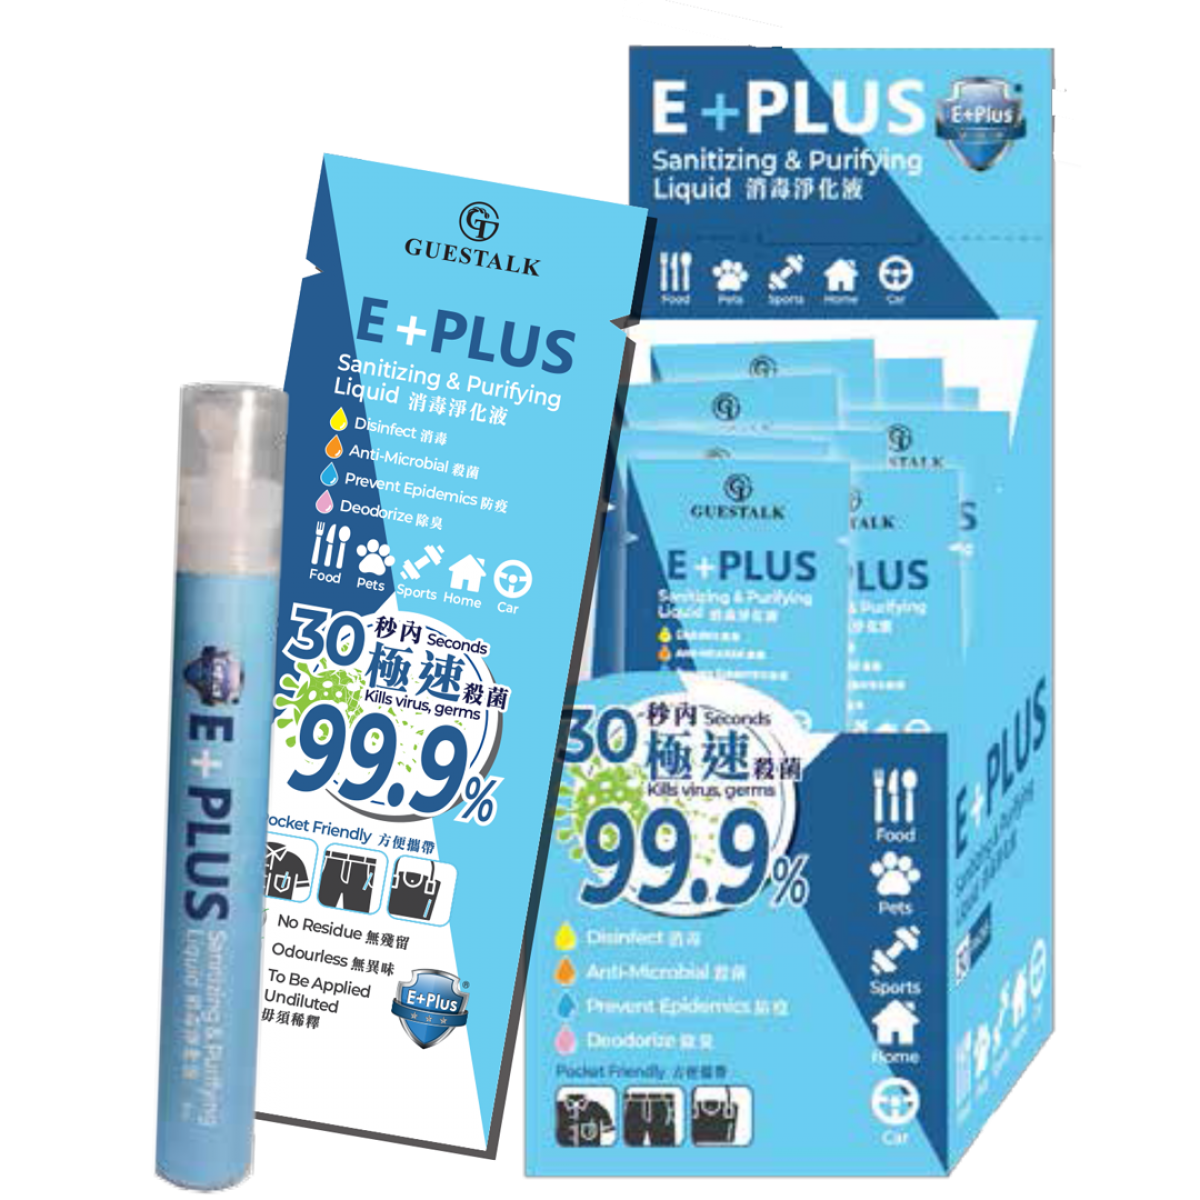 E+Plus 消毒淨化液